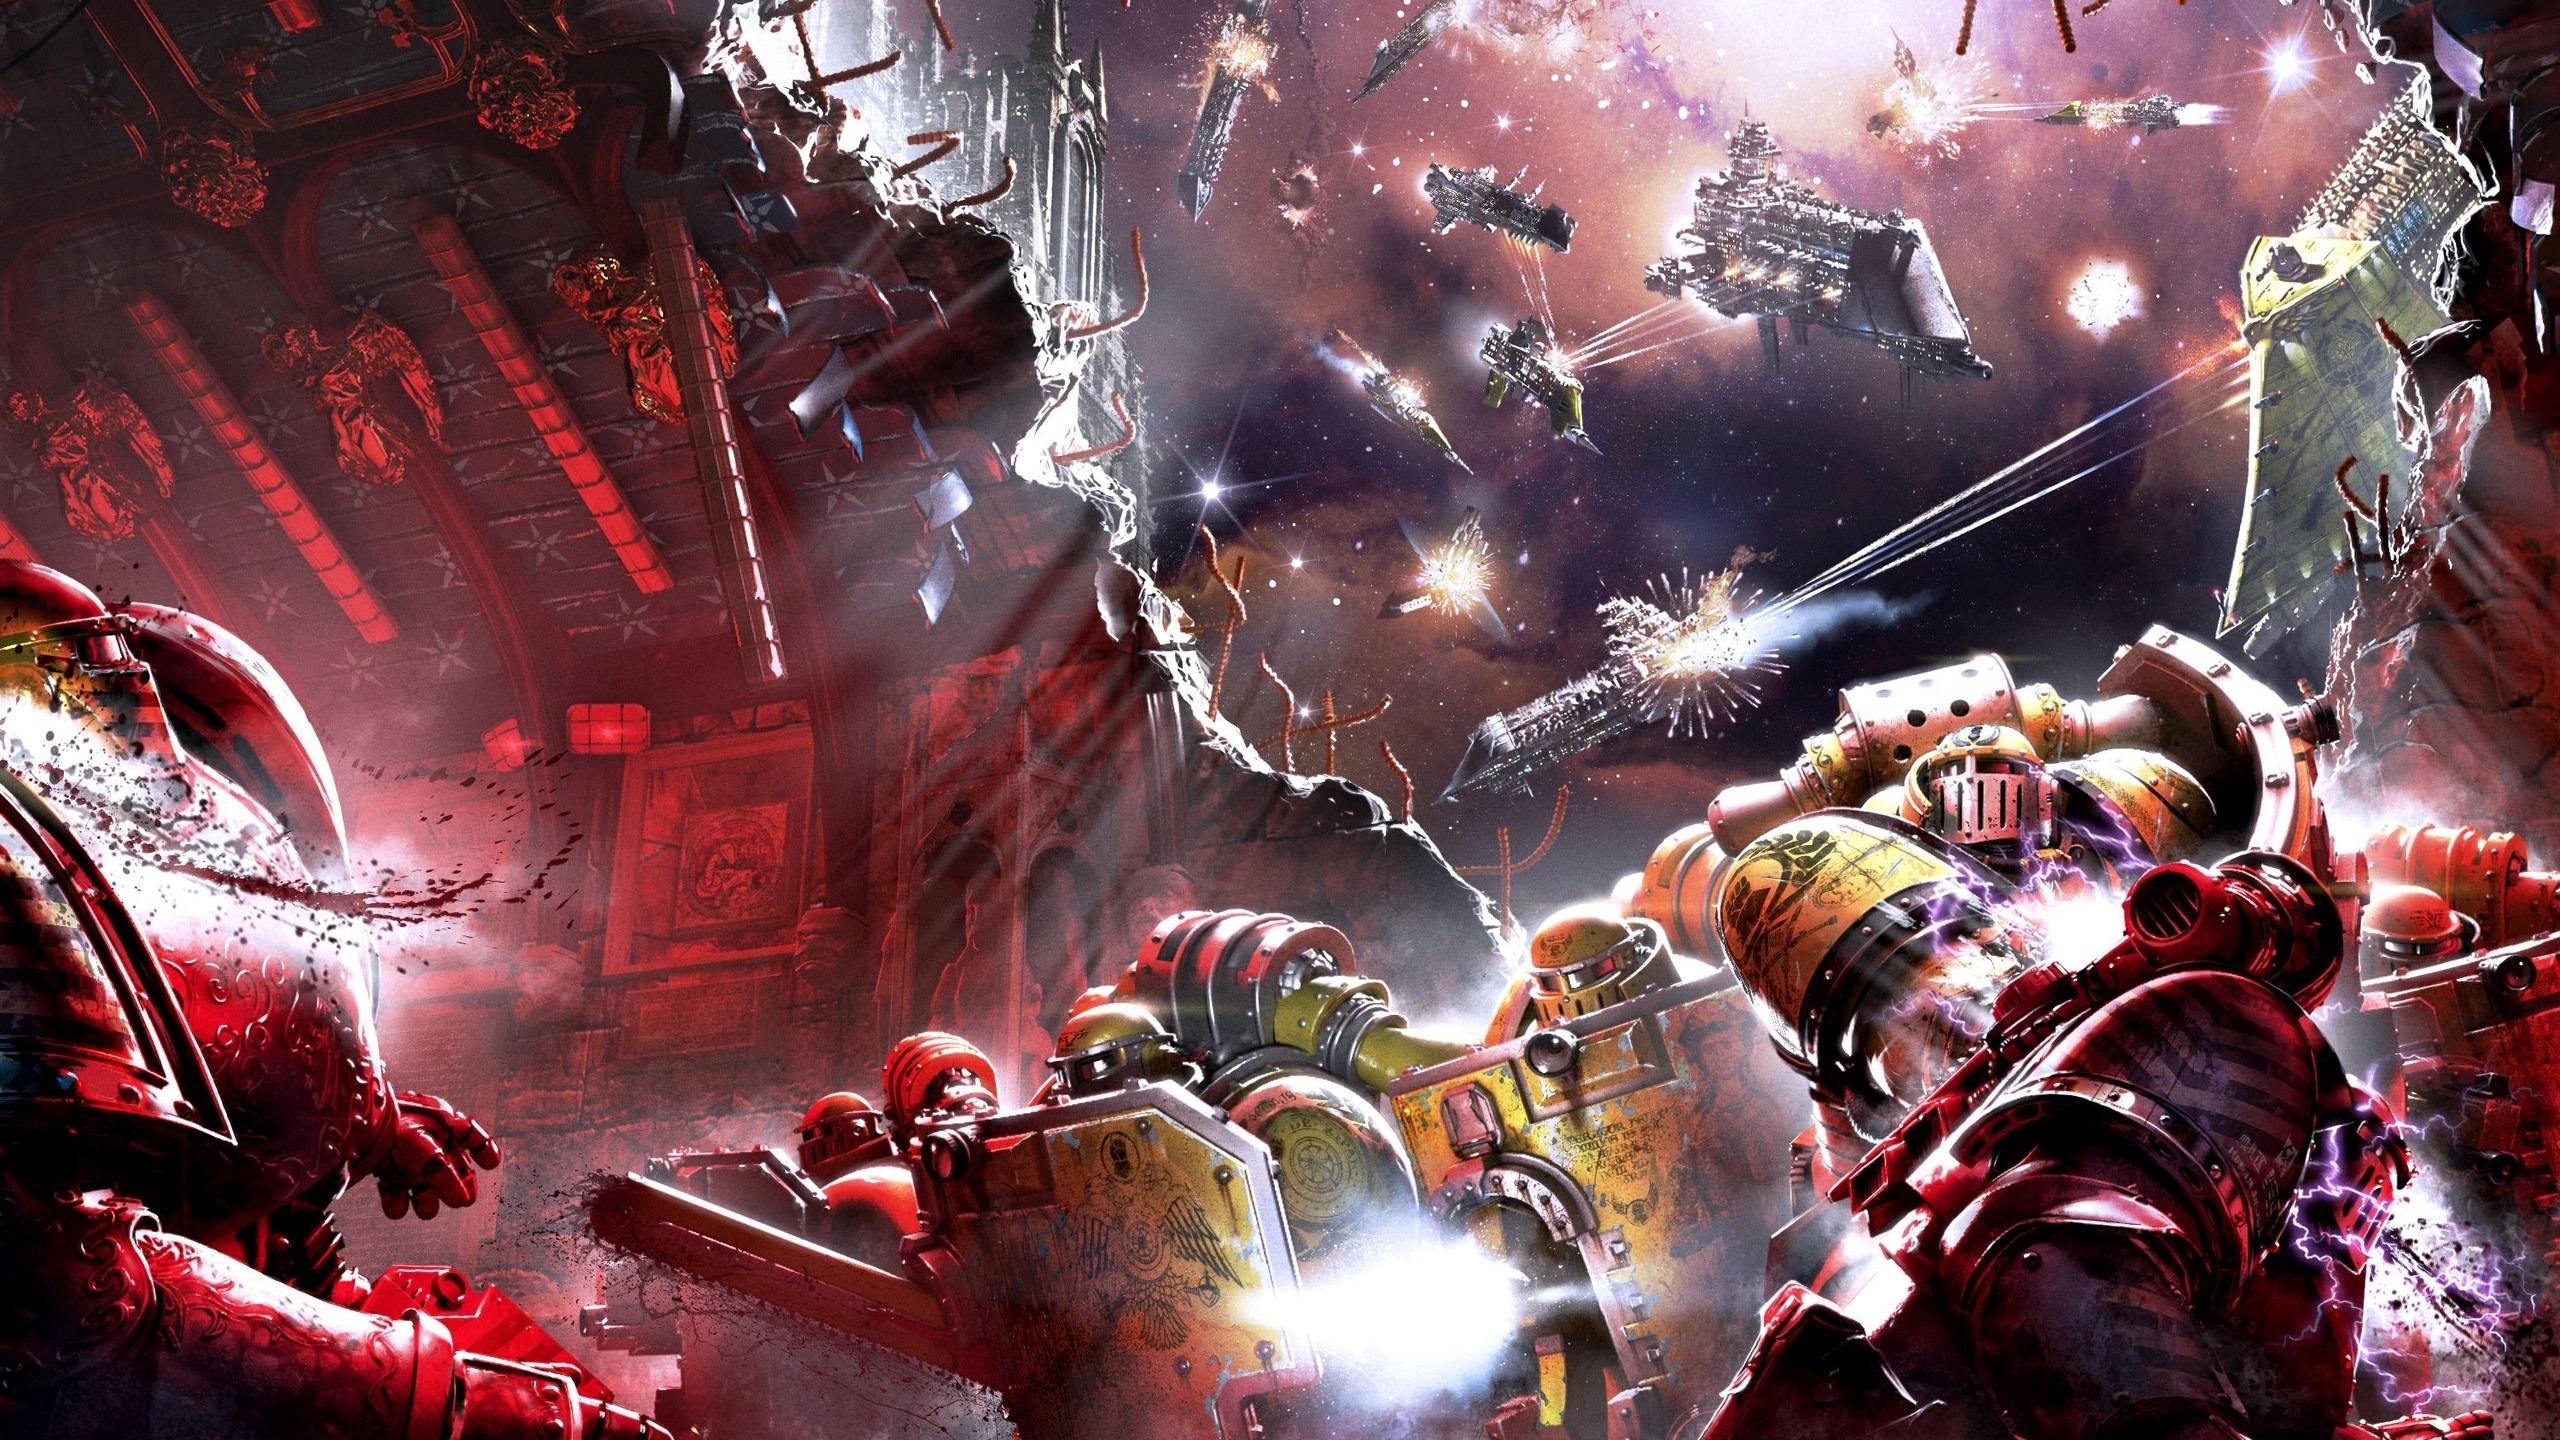 Space Battle Warhammer 40k Wallpaper Id